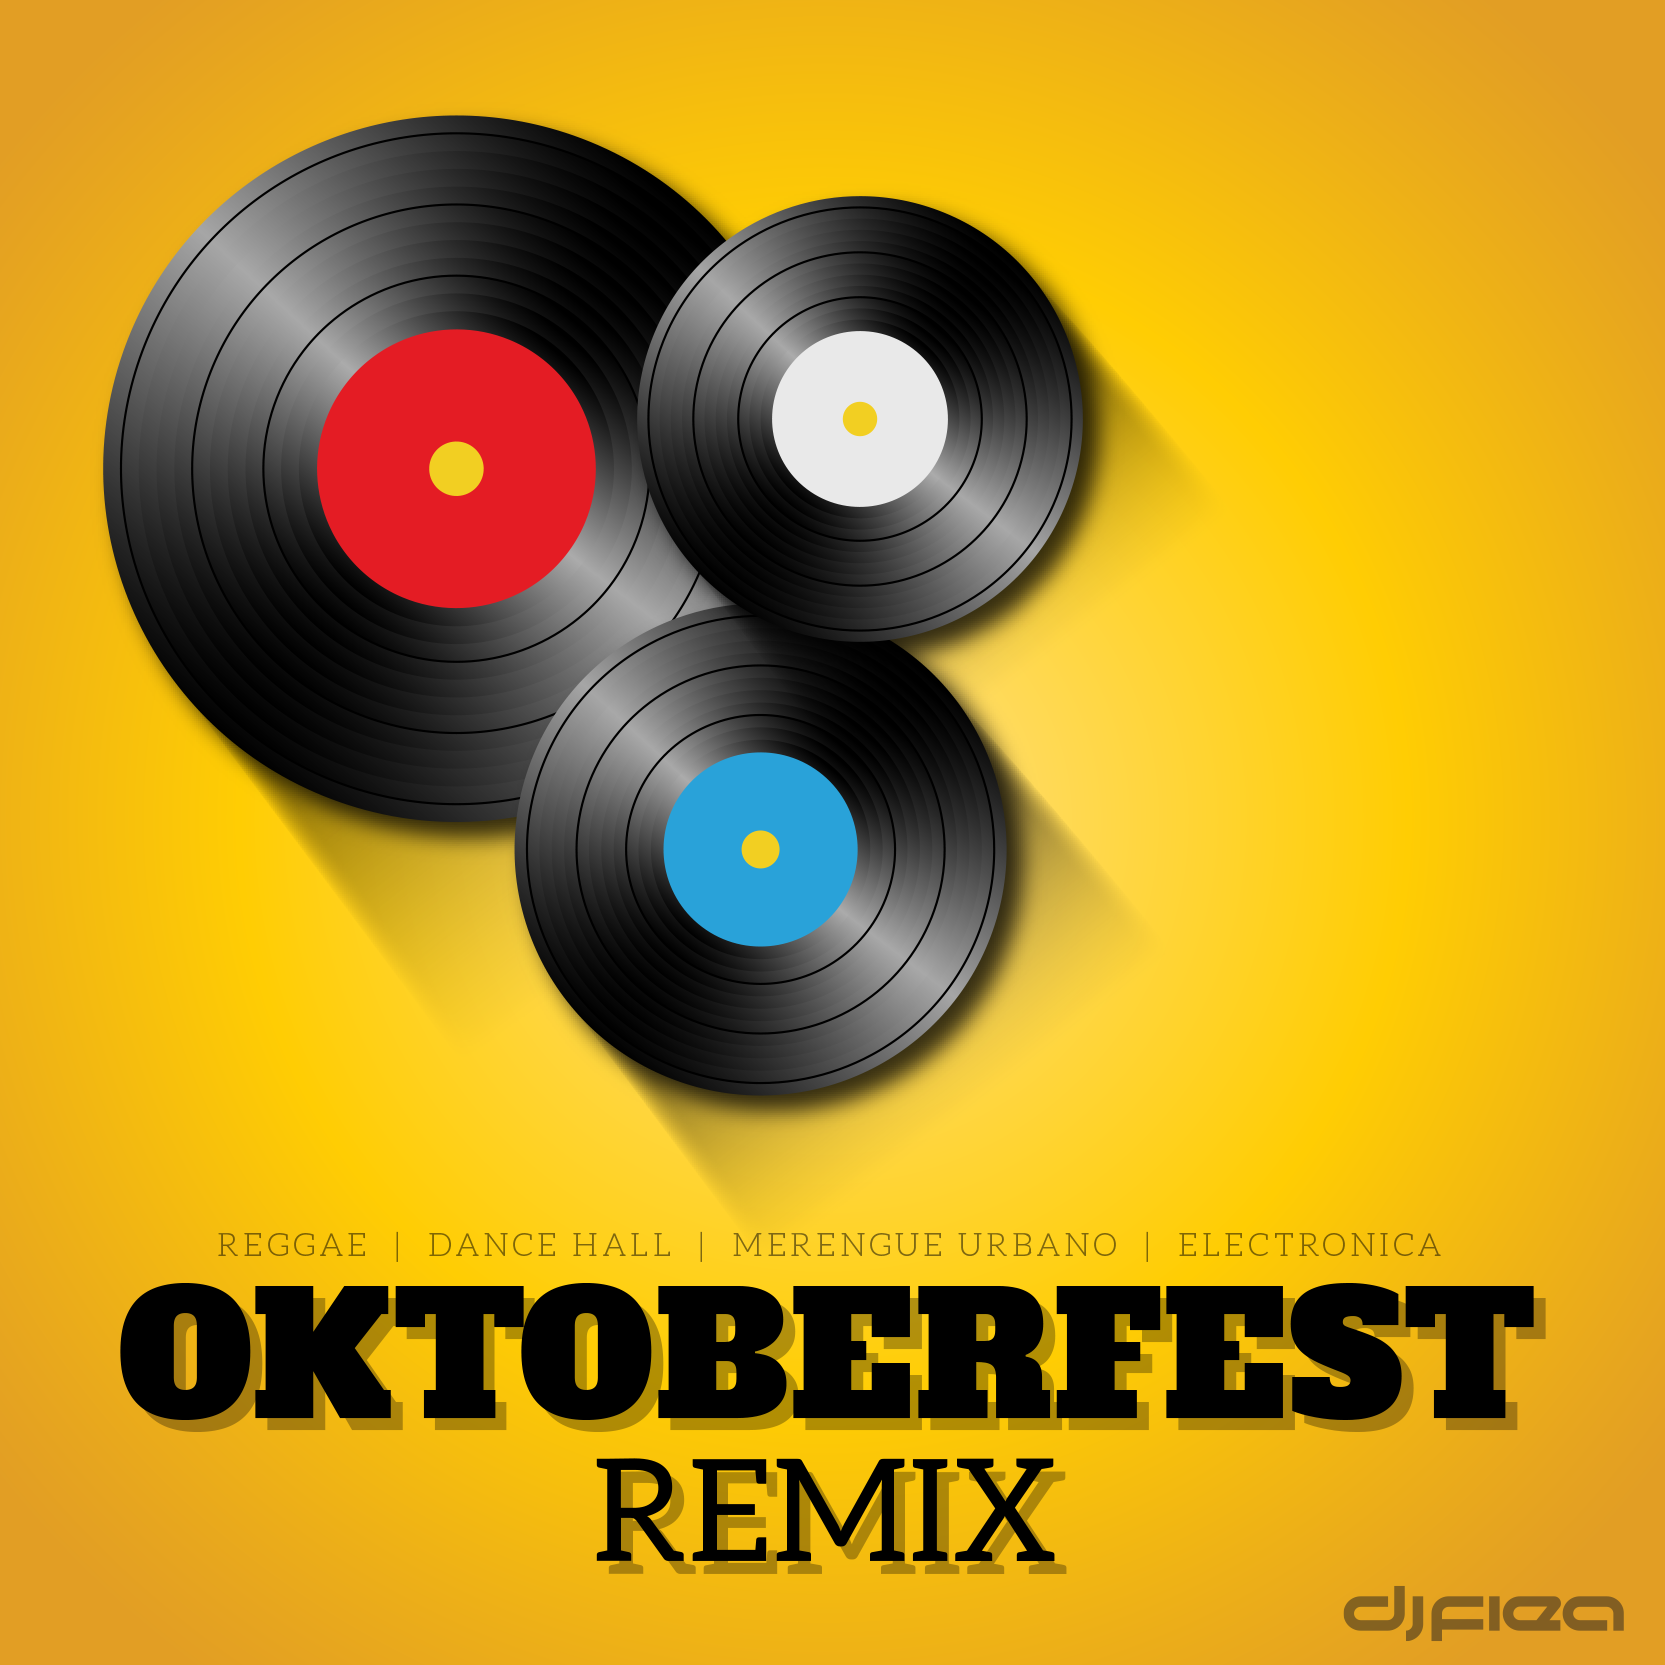 Oktoberfest Remix